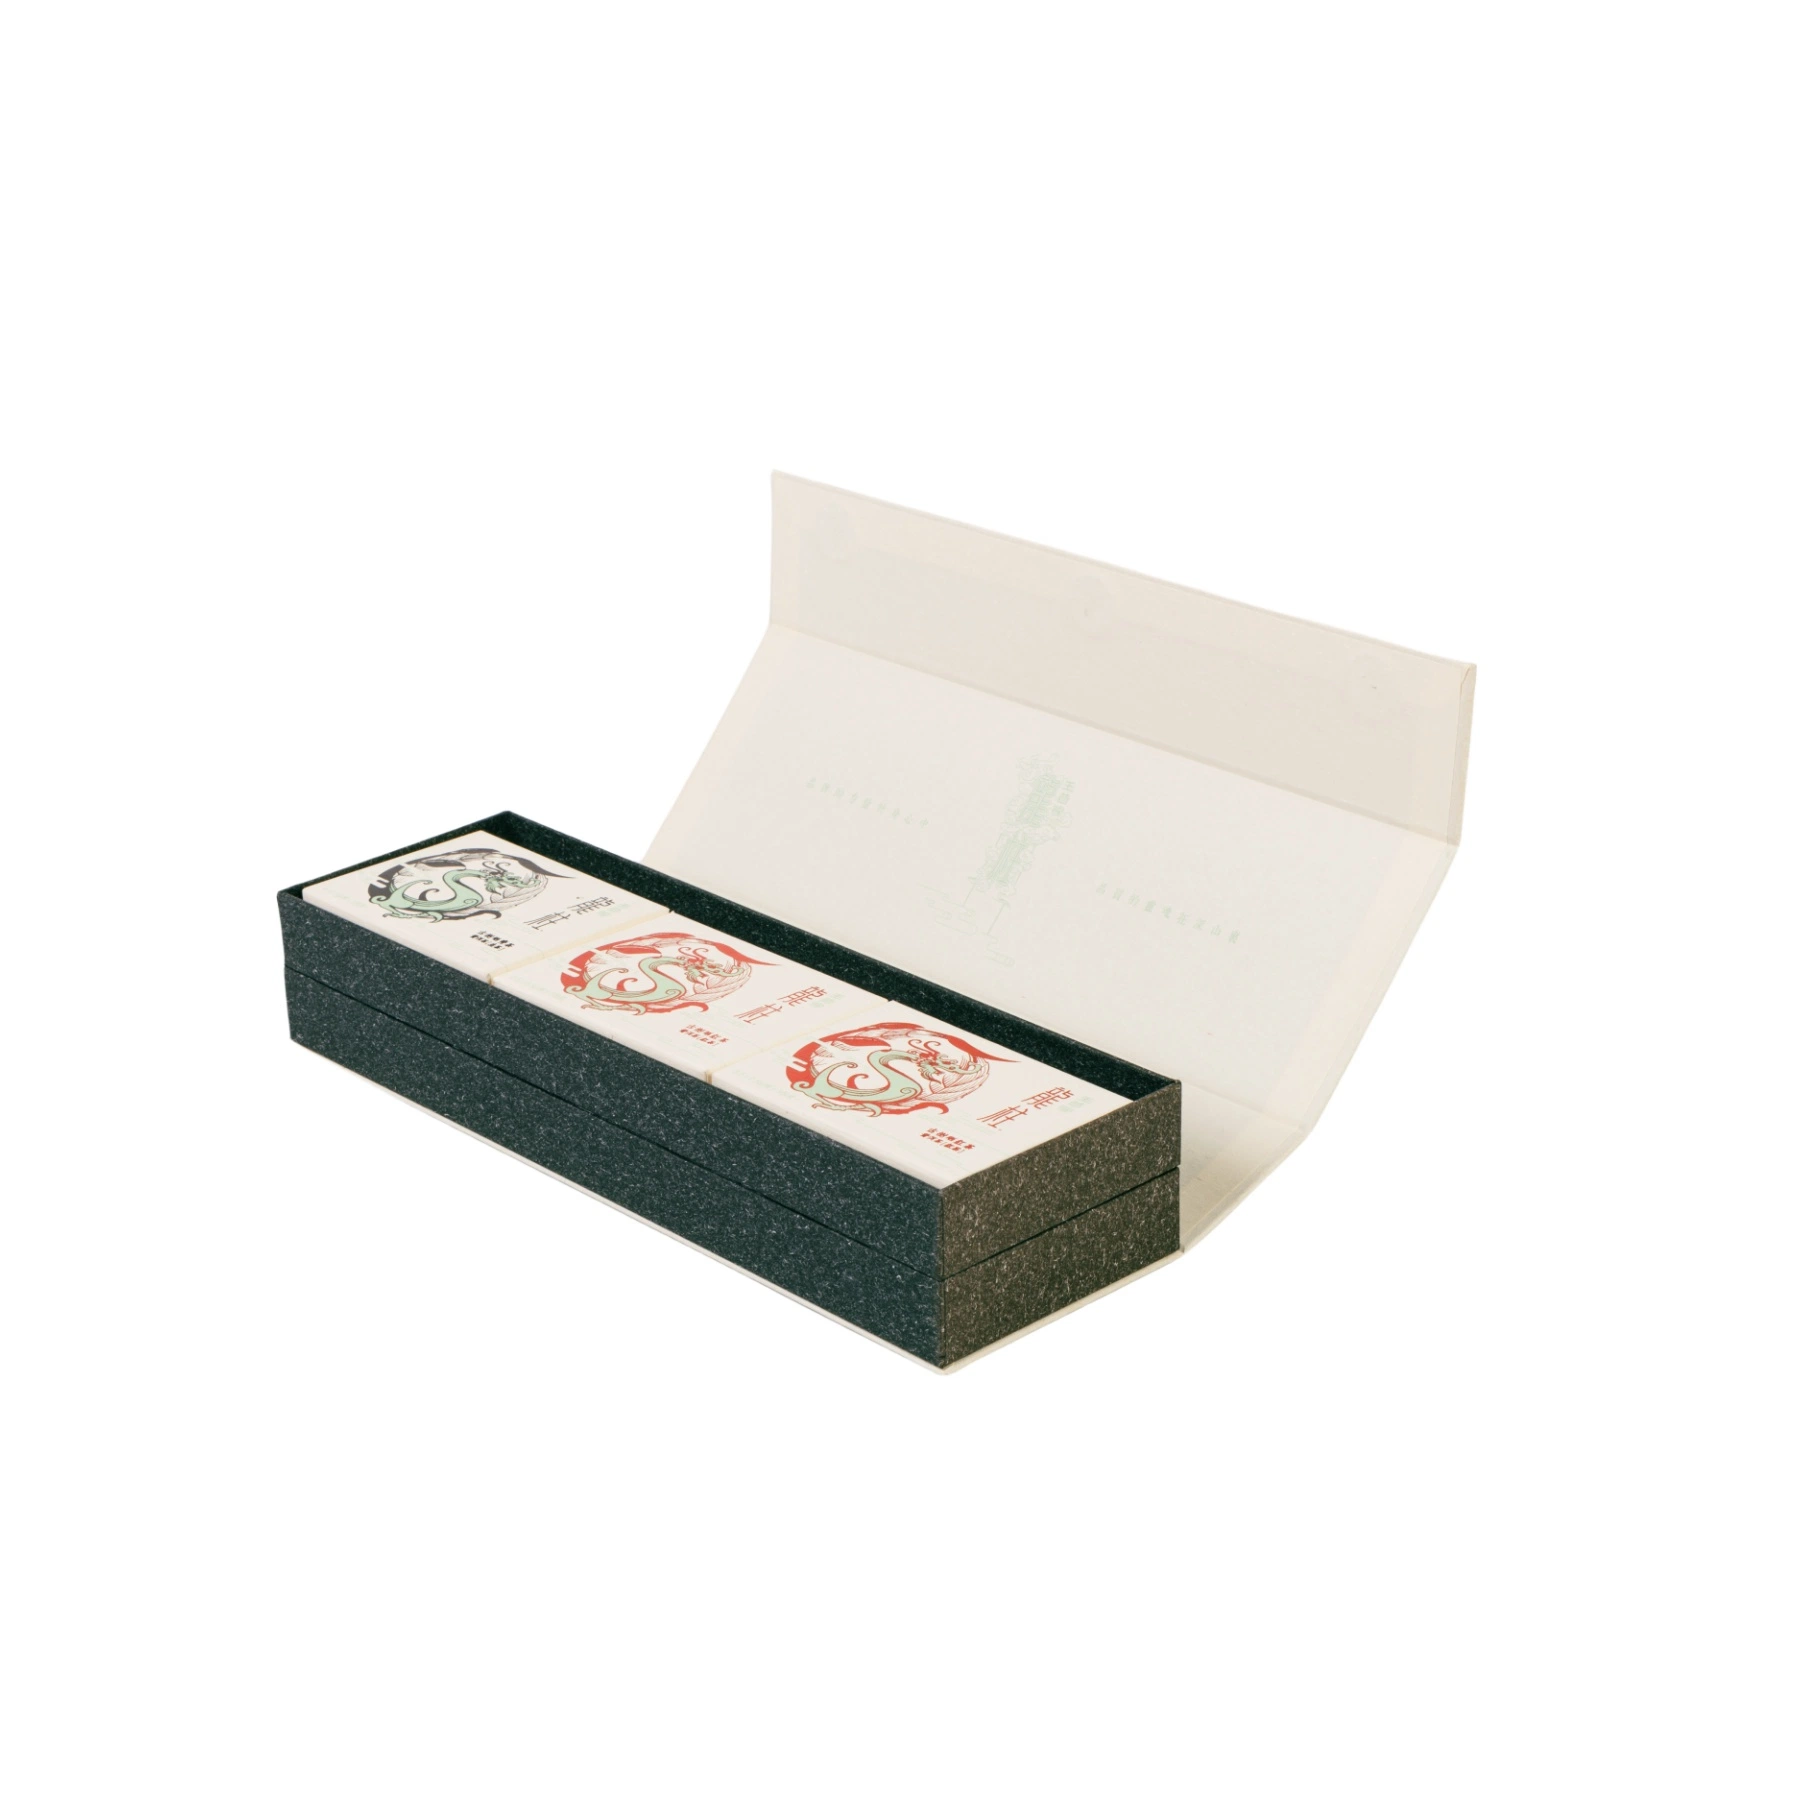 Elegent Folding Box Cardboard Box Gift Box for Tea and Food Packaging